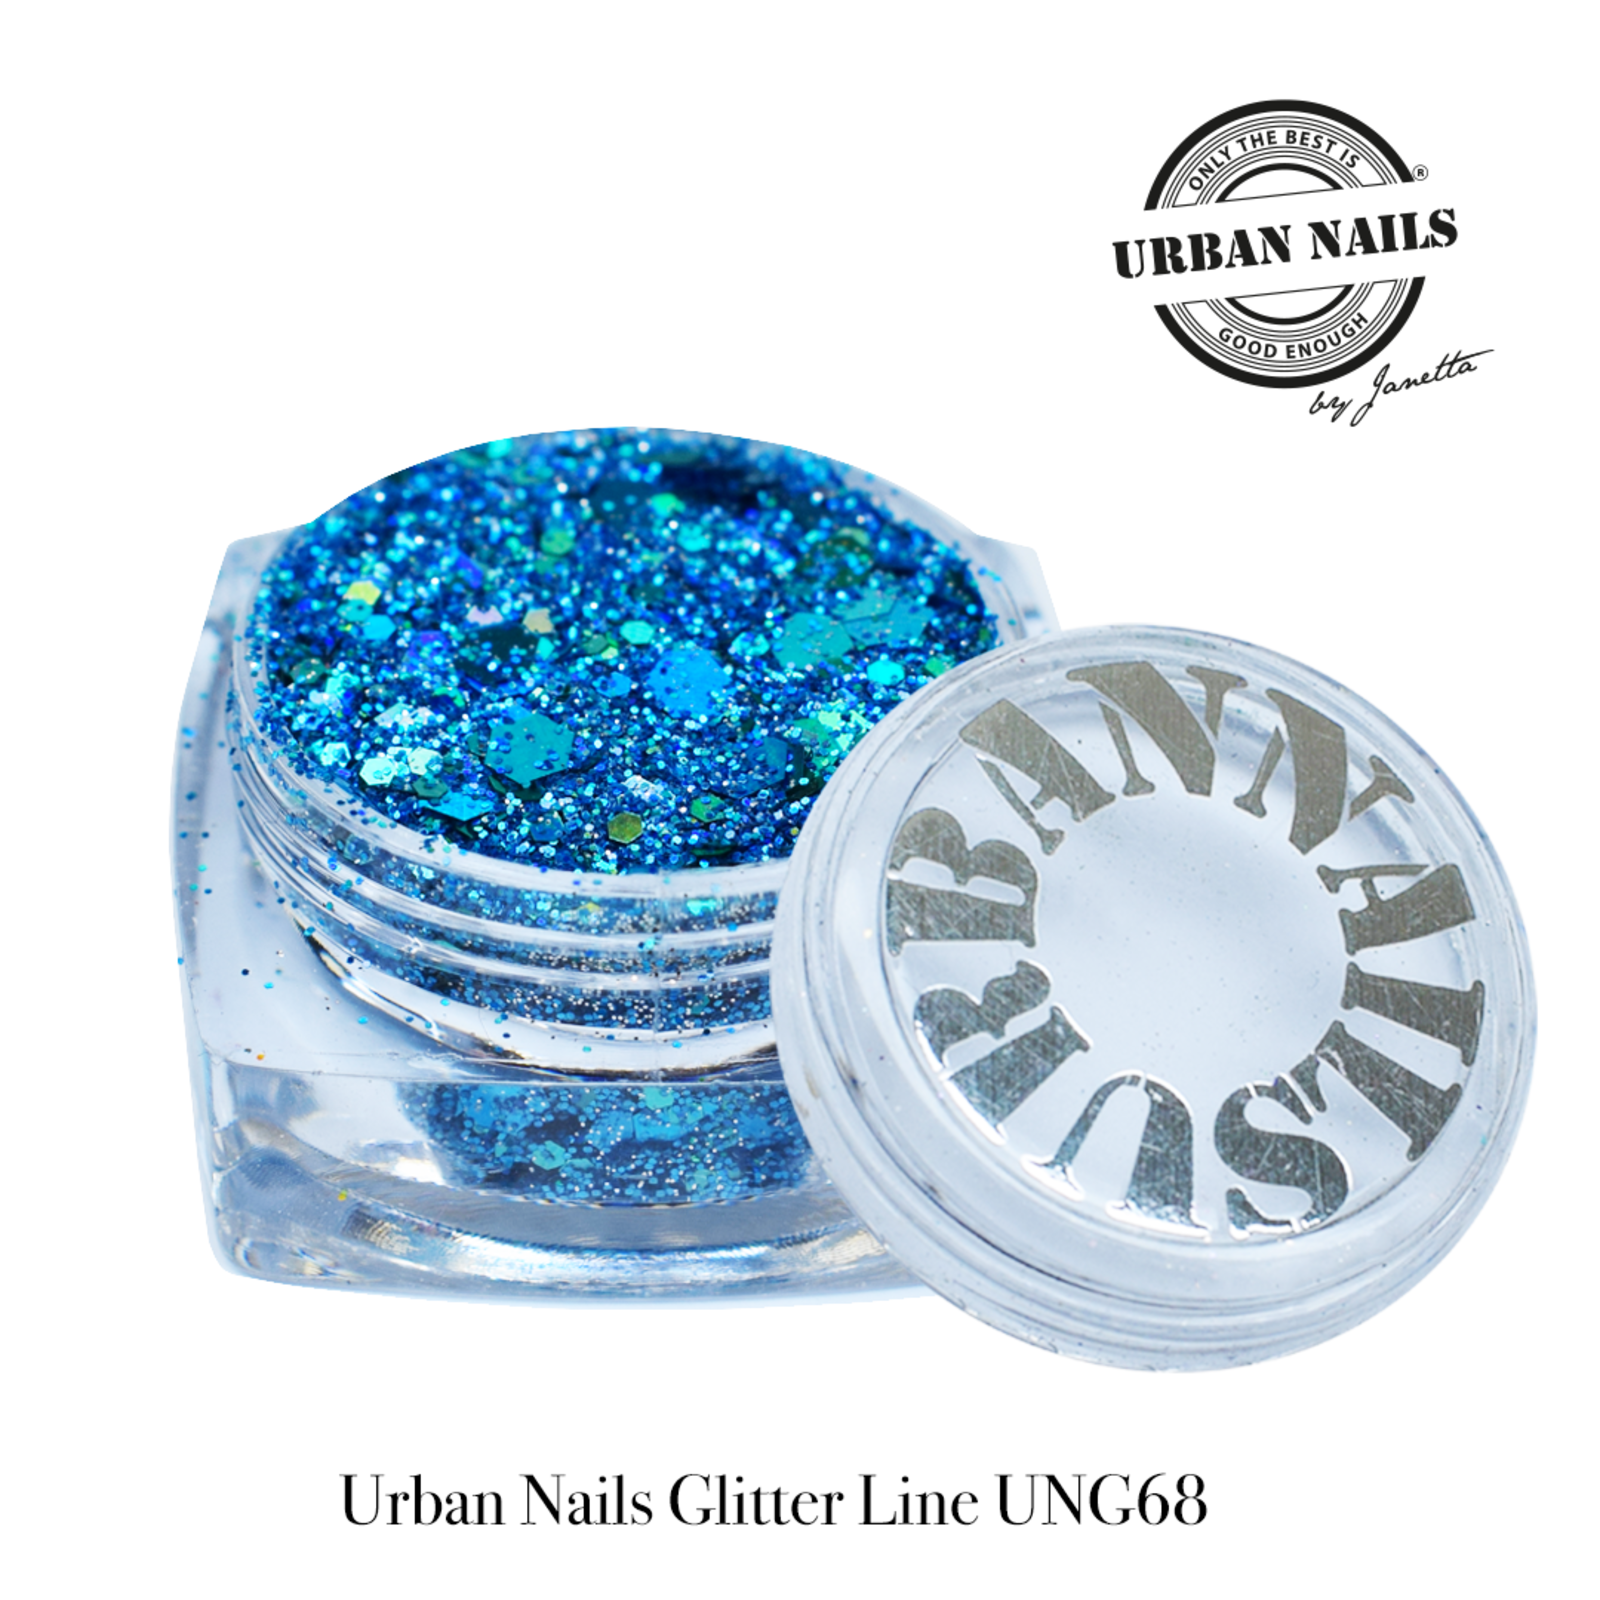 Urban nails Glitter Line UNG68